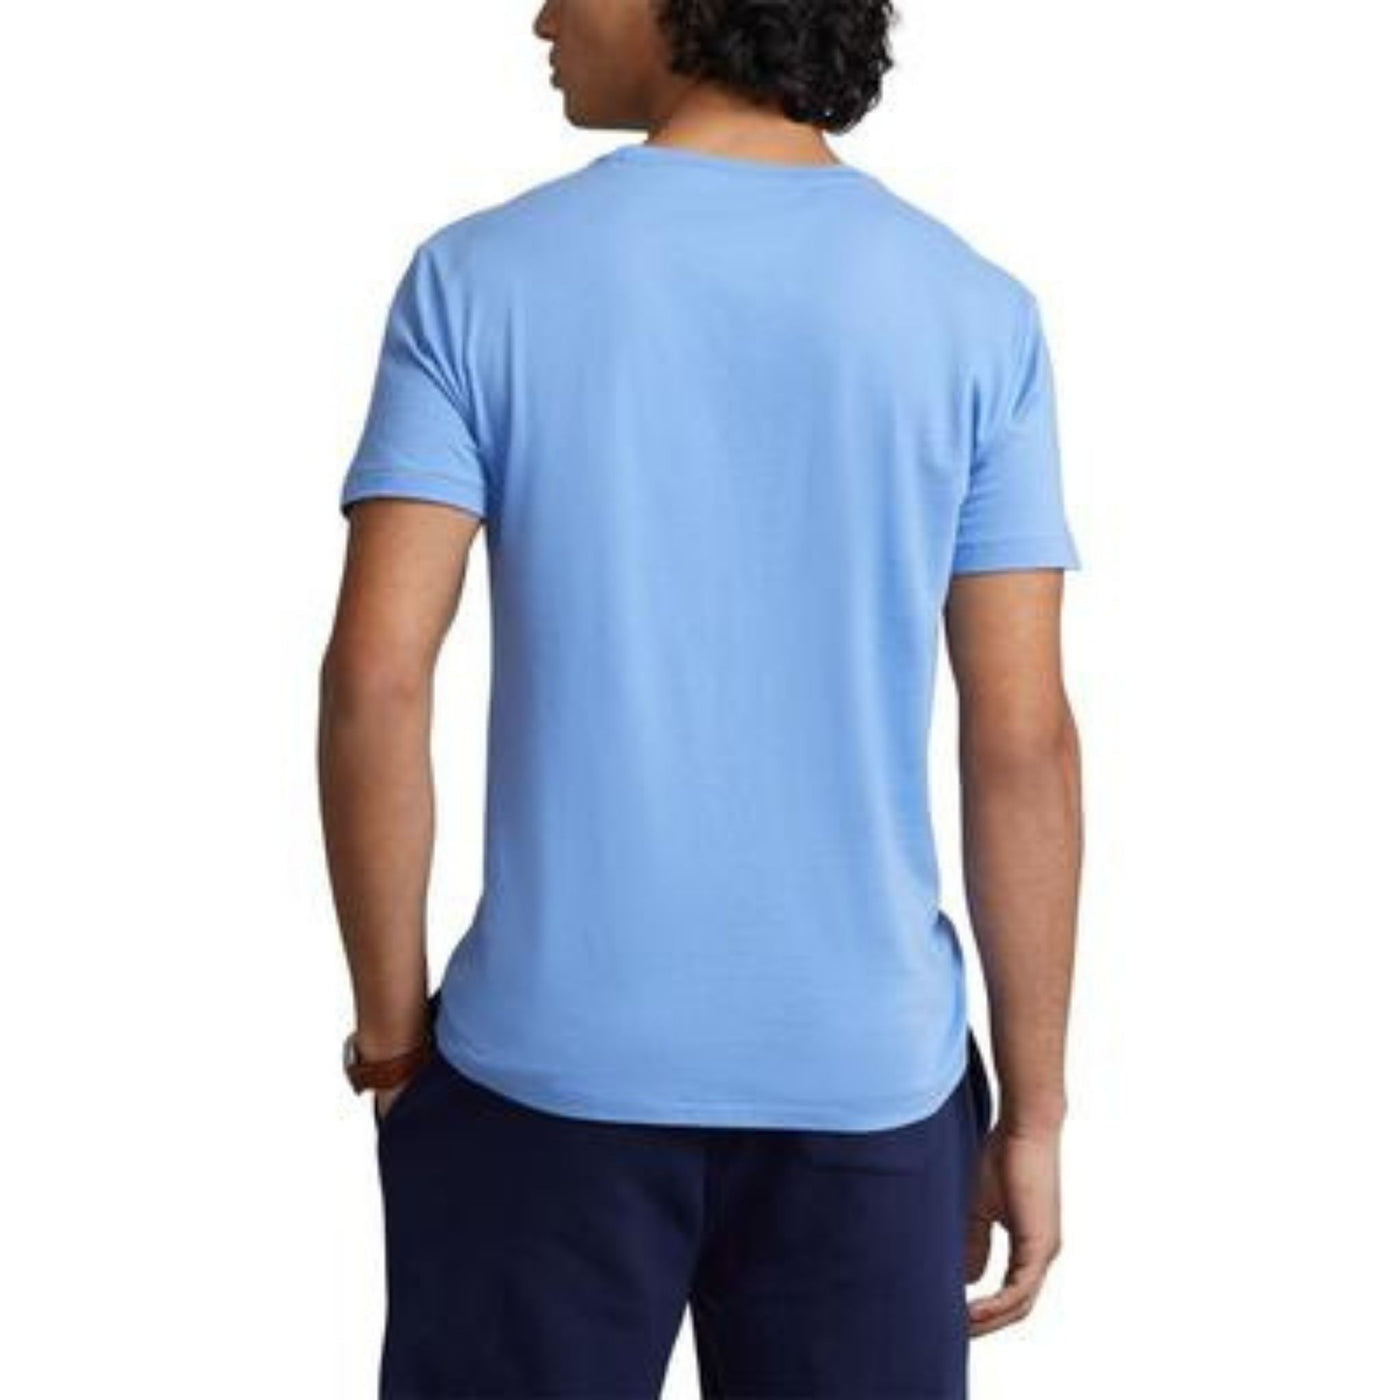 T-shirt uomo celeste Polo Ralph Lauren su modello vista retro